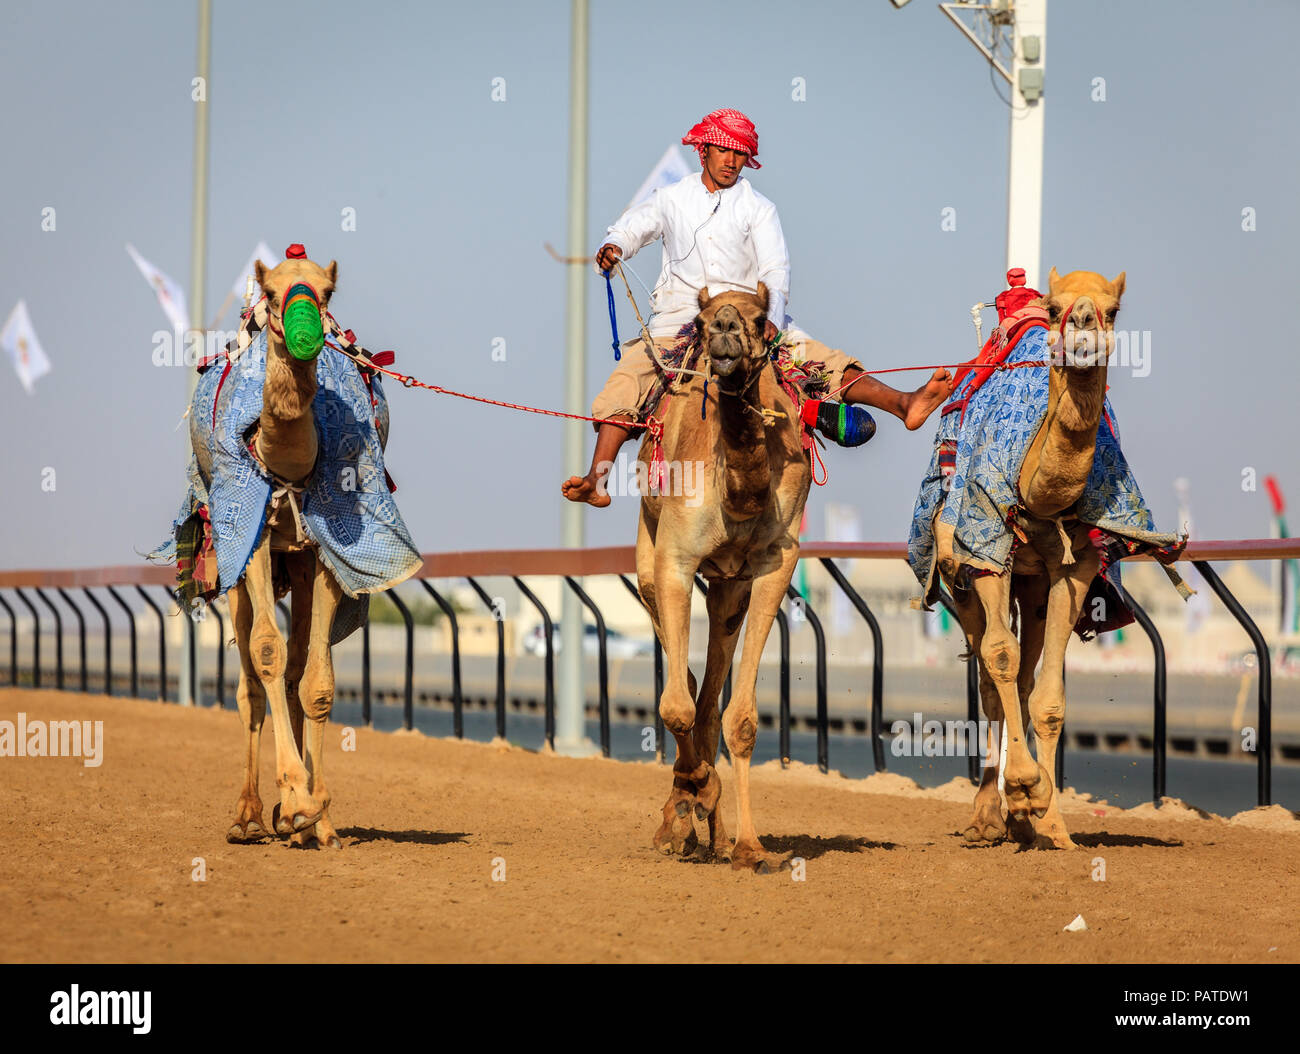 Dubai, United Arab Emirates - March 25, 2016: Practicing for camel racing at Dubai Camel Racing Club, Al Marmoom, UAE Stock Photo